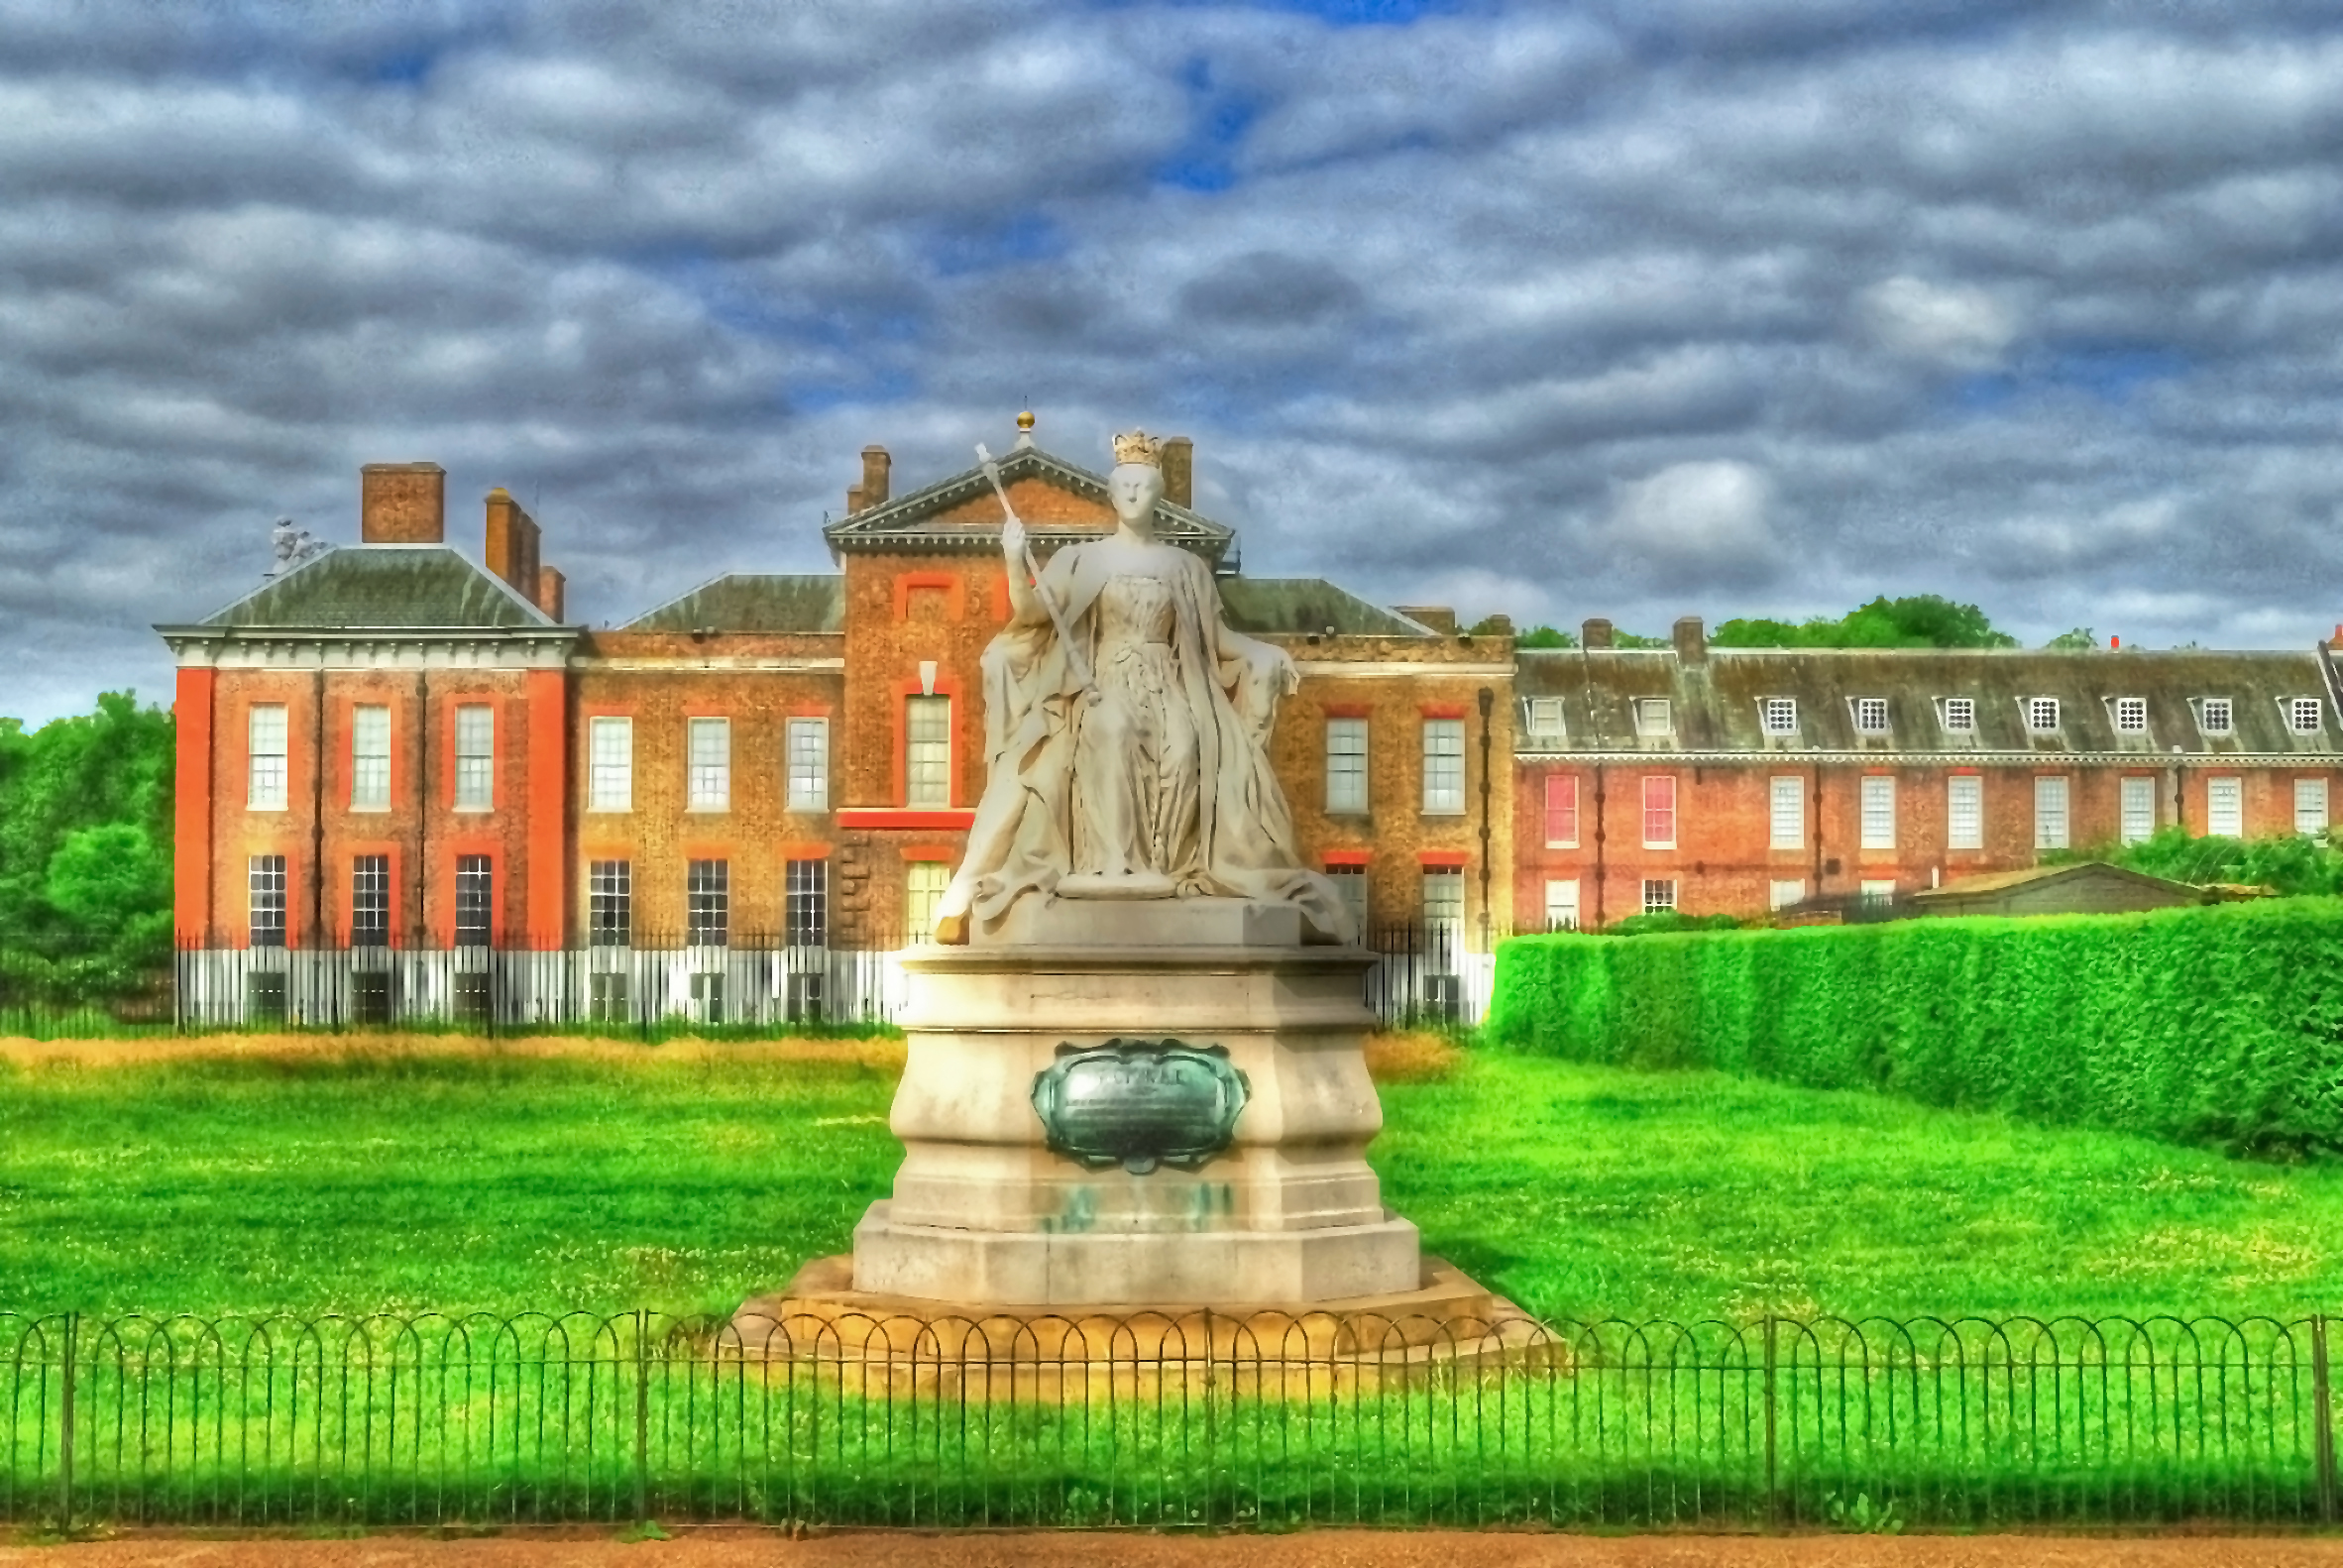 Queen Victoria Statue by philb2012